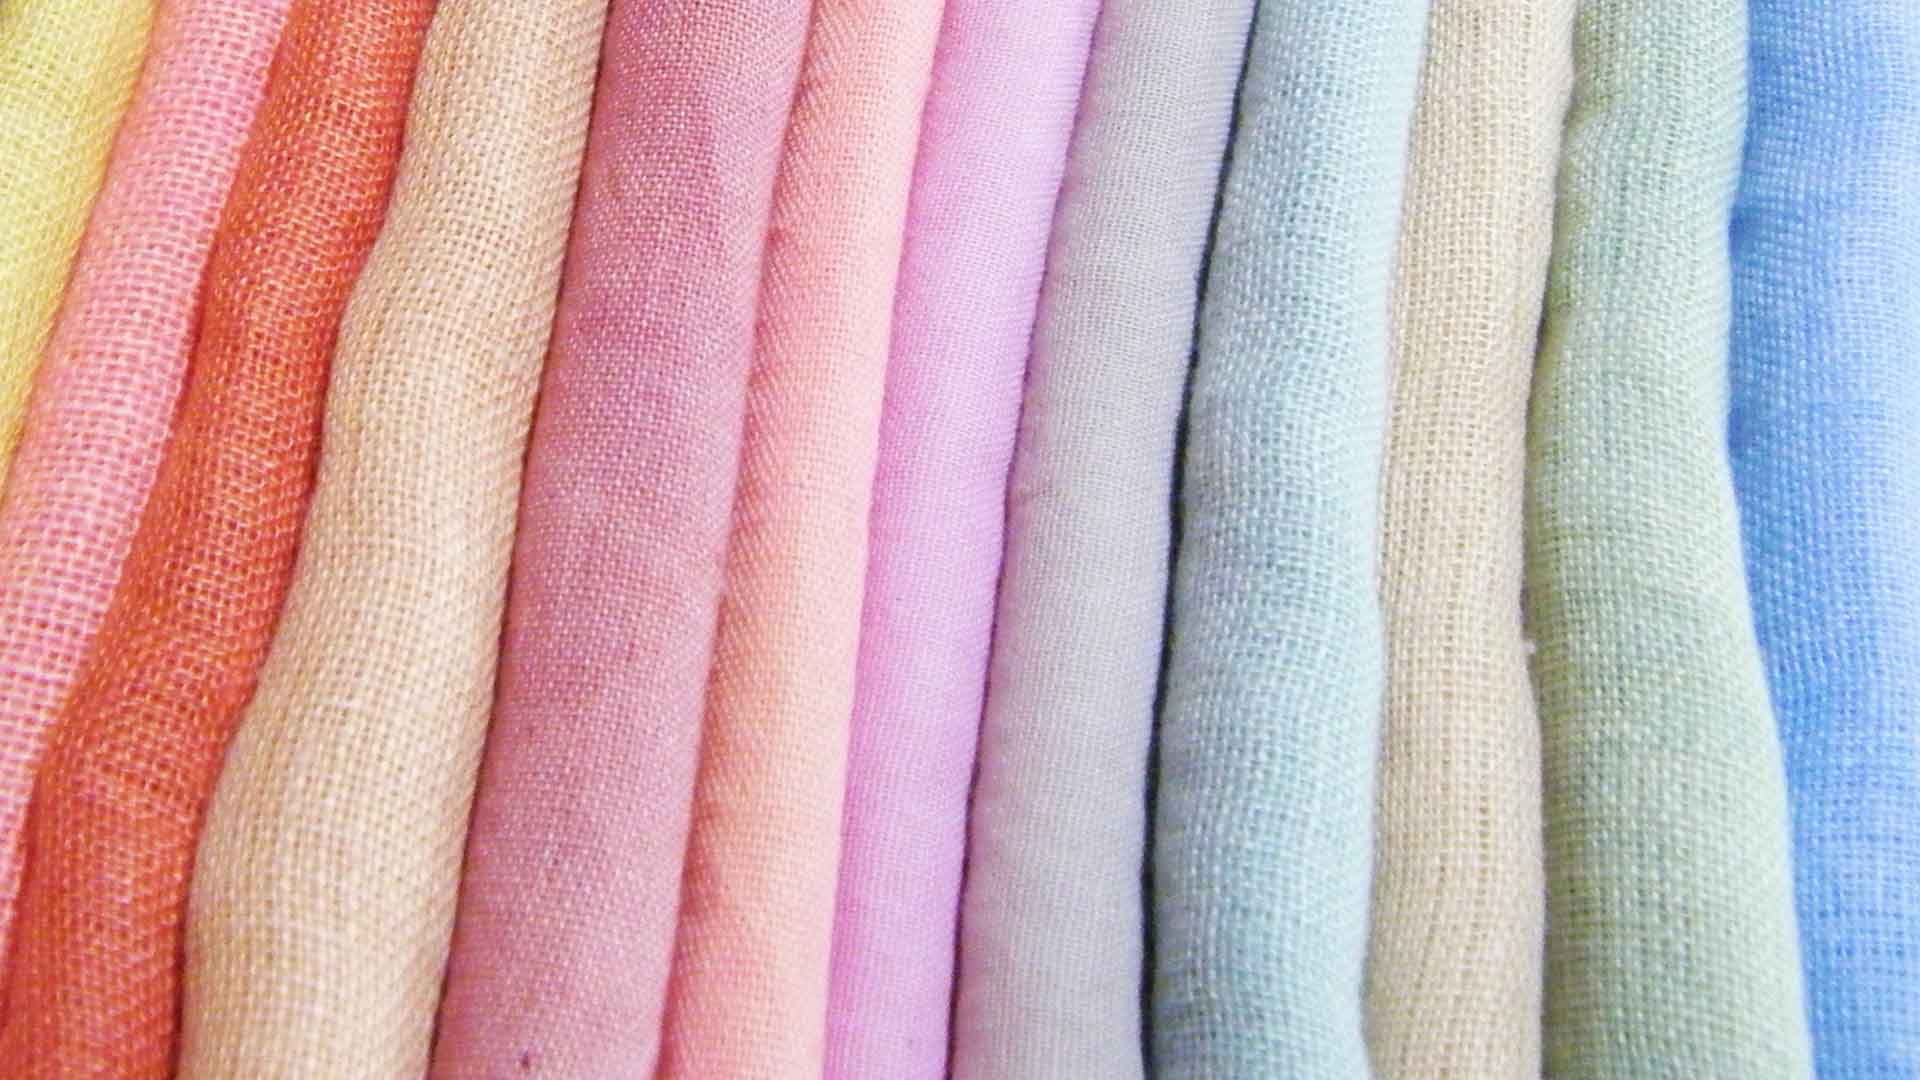 Pastel-colored cloths